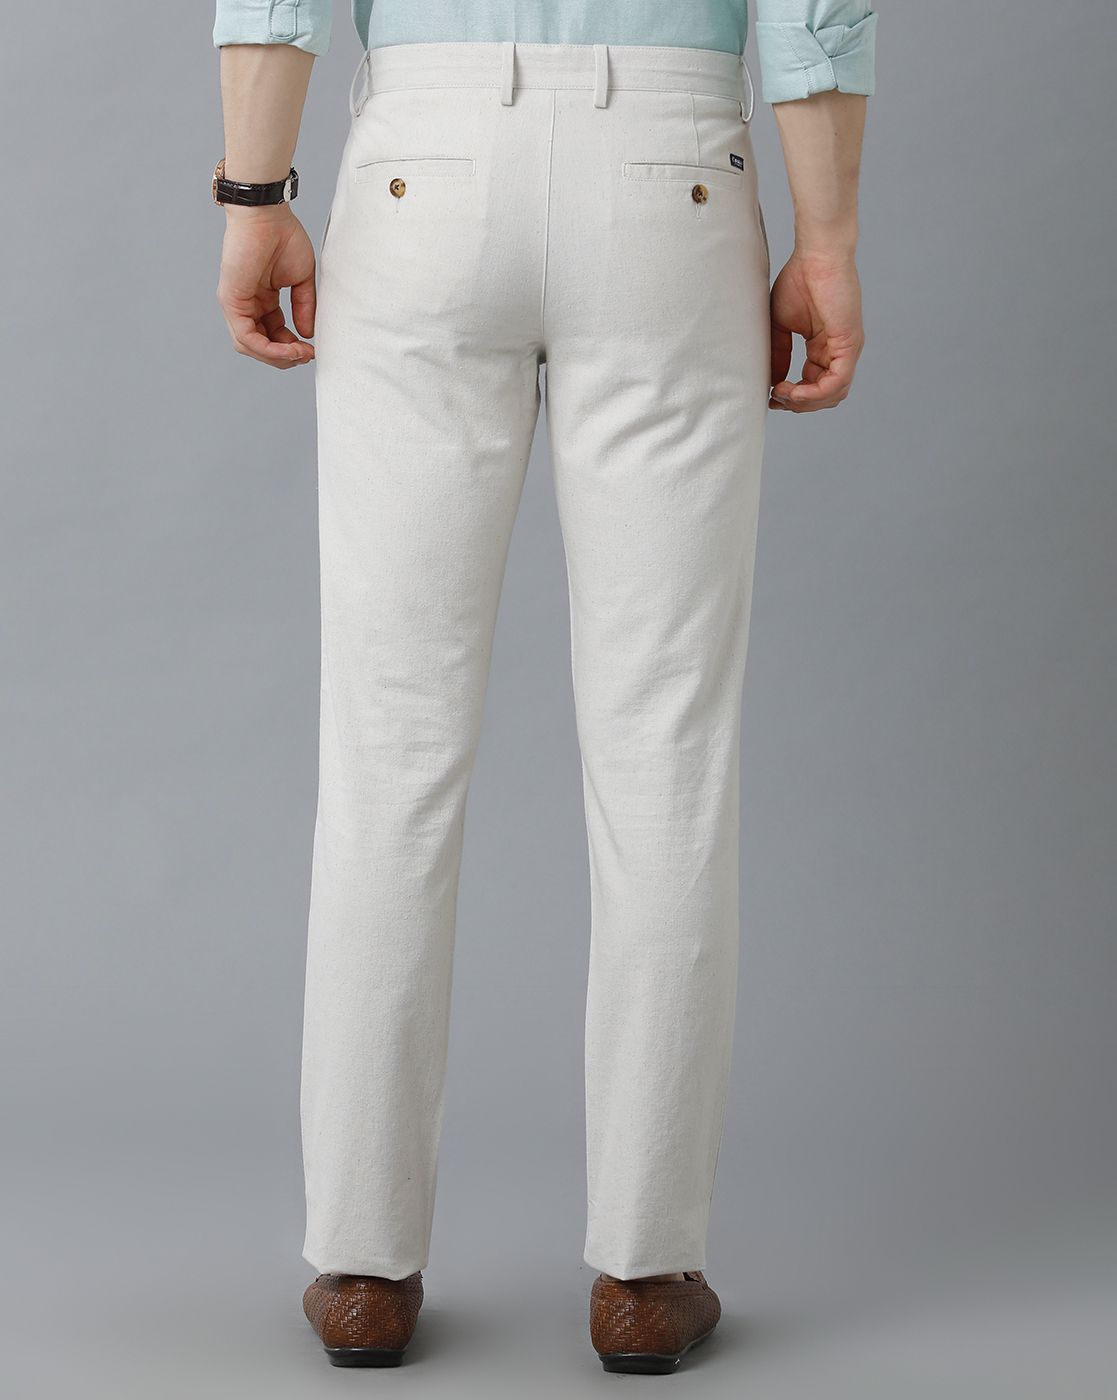 La Mode du 26 juillet 1834: (masculine fashion) sheet suit - trousers  casimir - Redingote with velvet collar - vest of piqué - trousers taupe  skin and top hat.